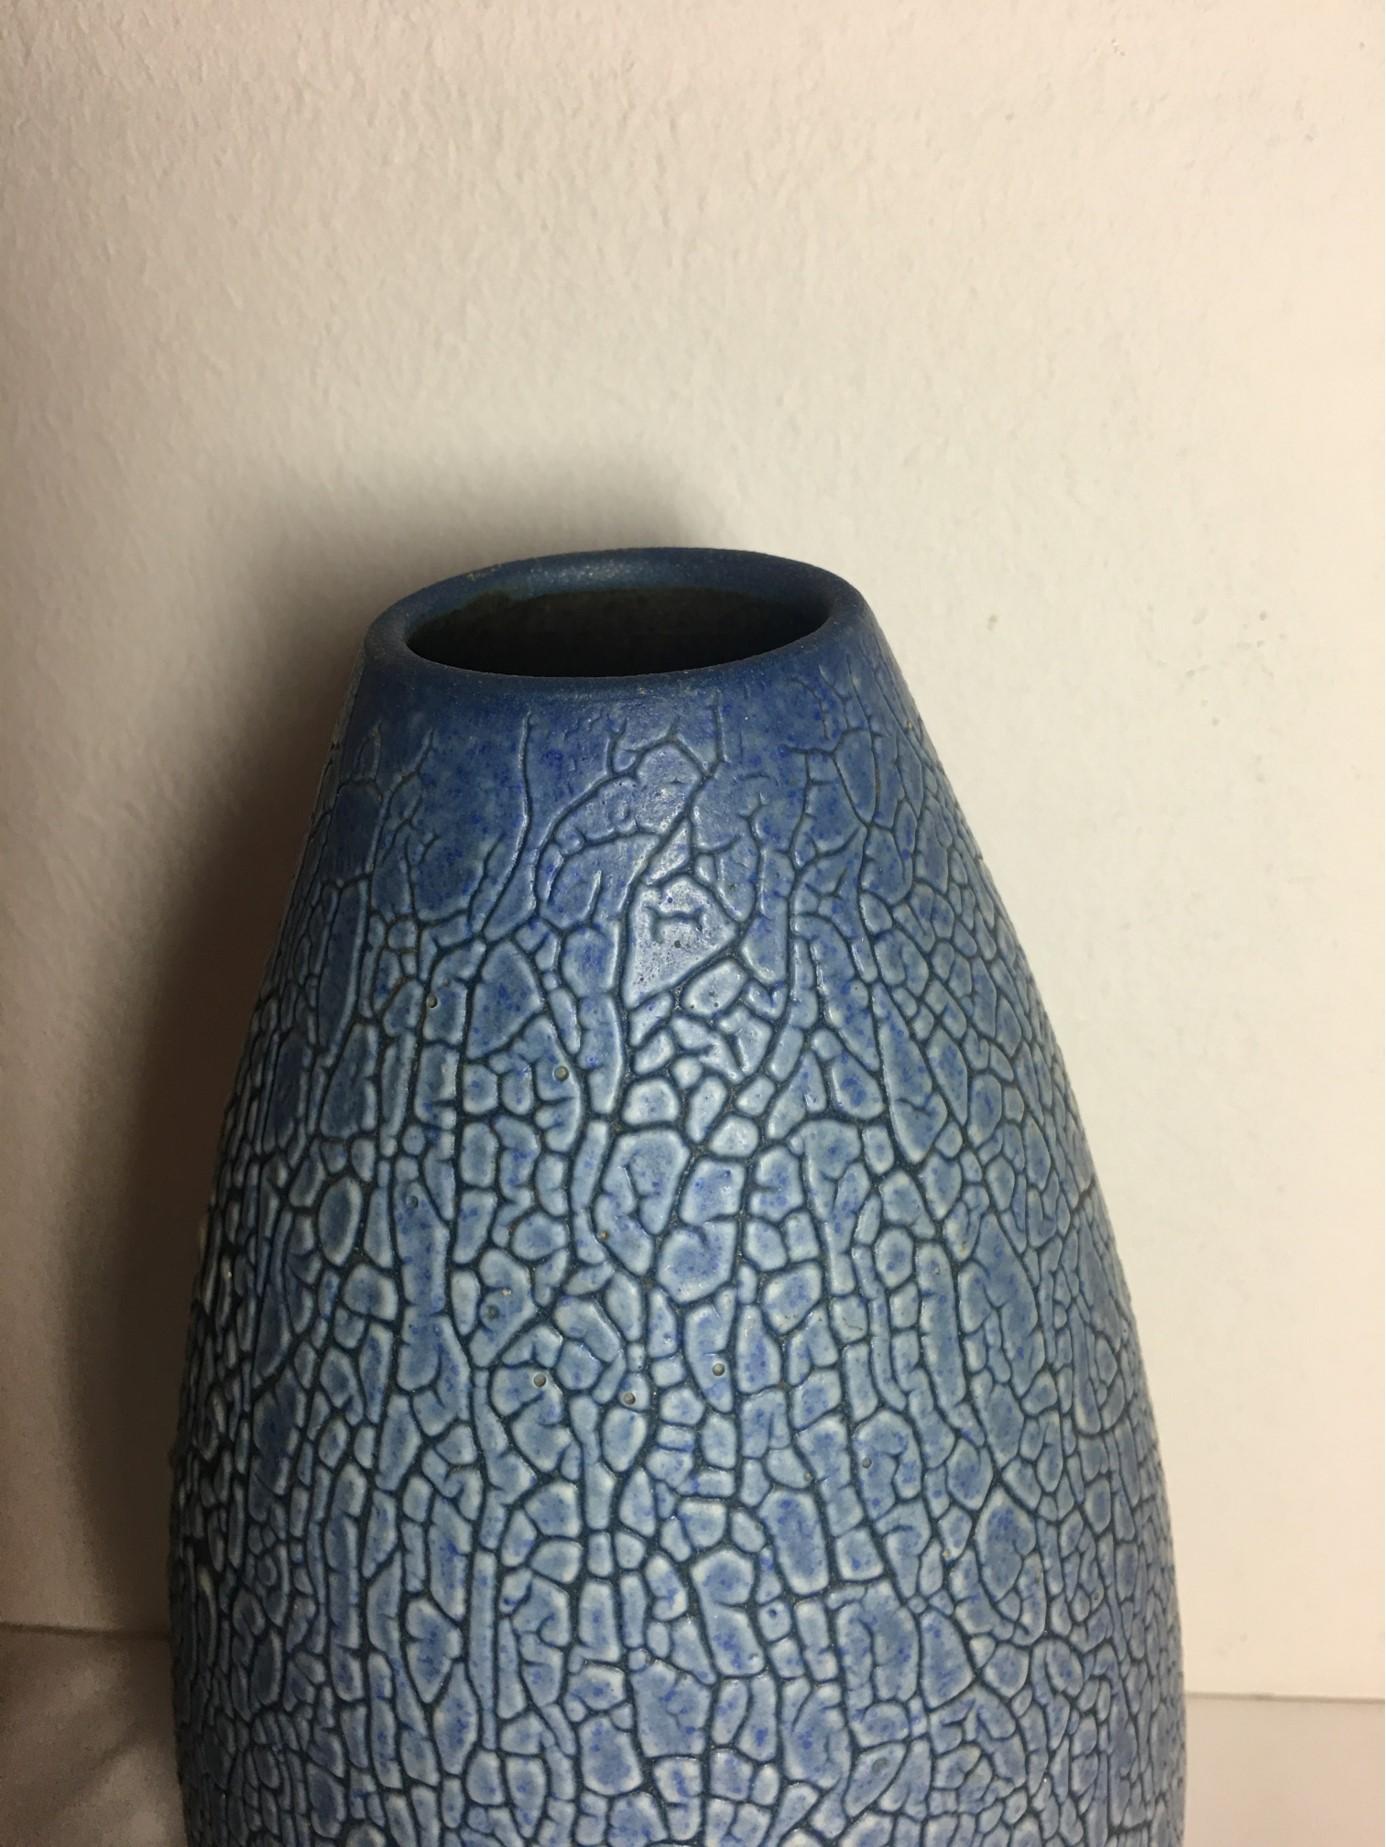 Reptile Skin Look Ceramic Vase from 1950s Germany For Sale 4